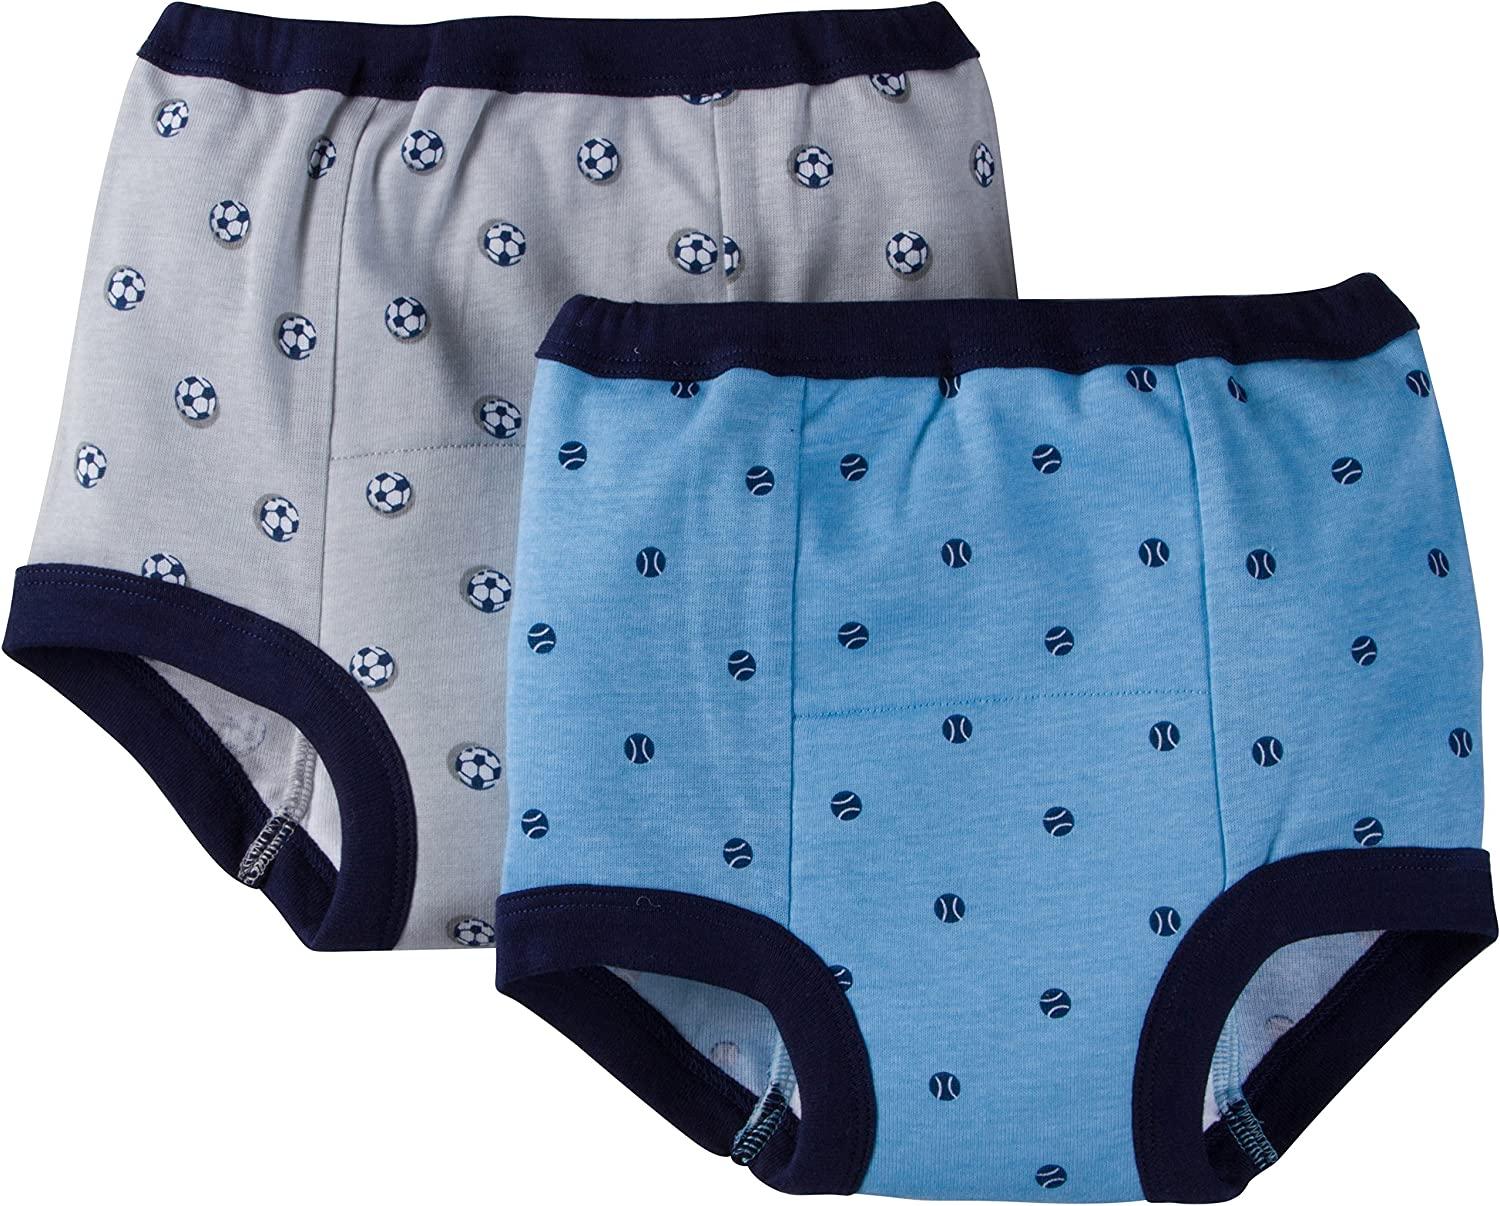 100)4PC/S Baby Training Pants Potty Training Underwear Toddlers Boys Girls